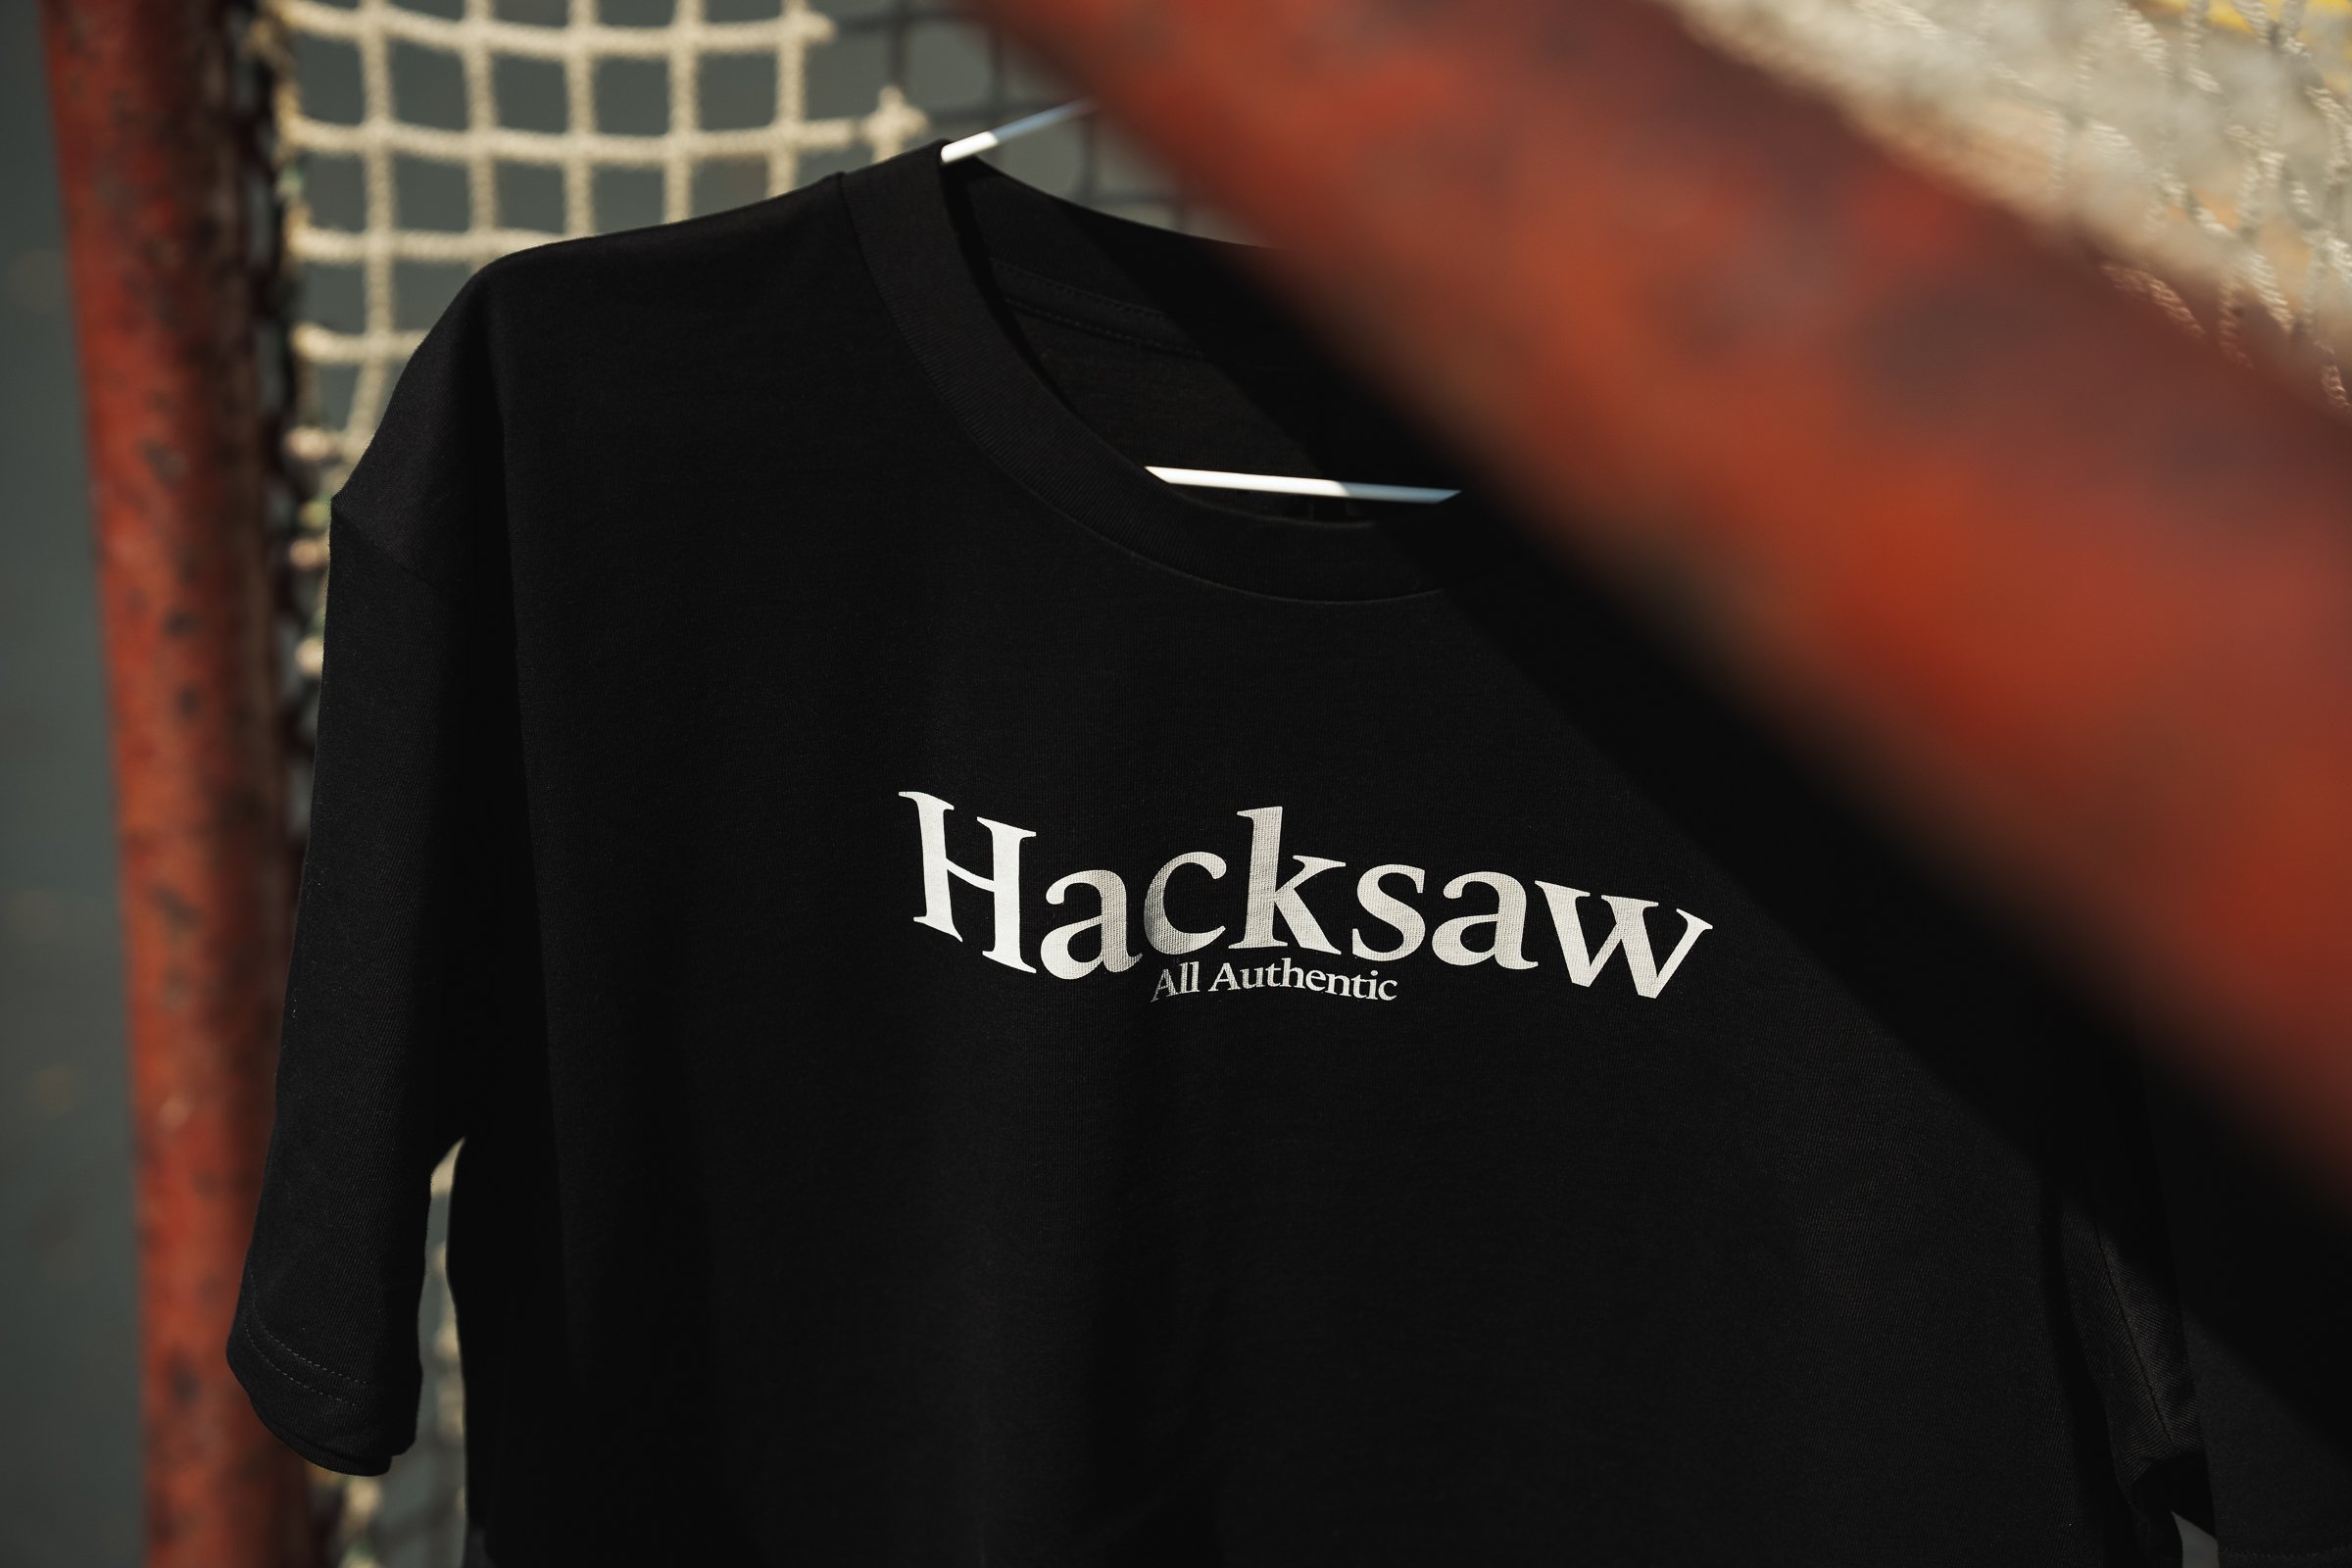 Hacksaw - product (09).jpg